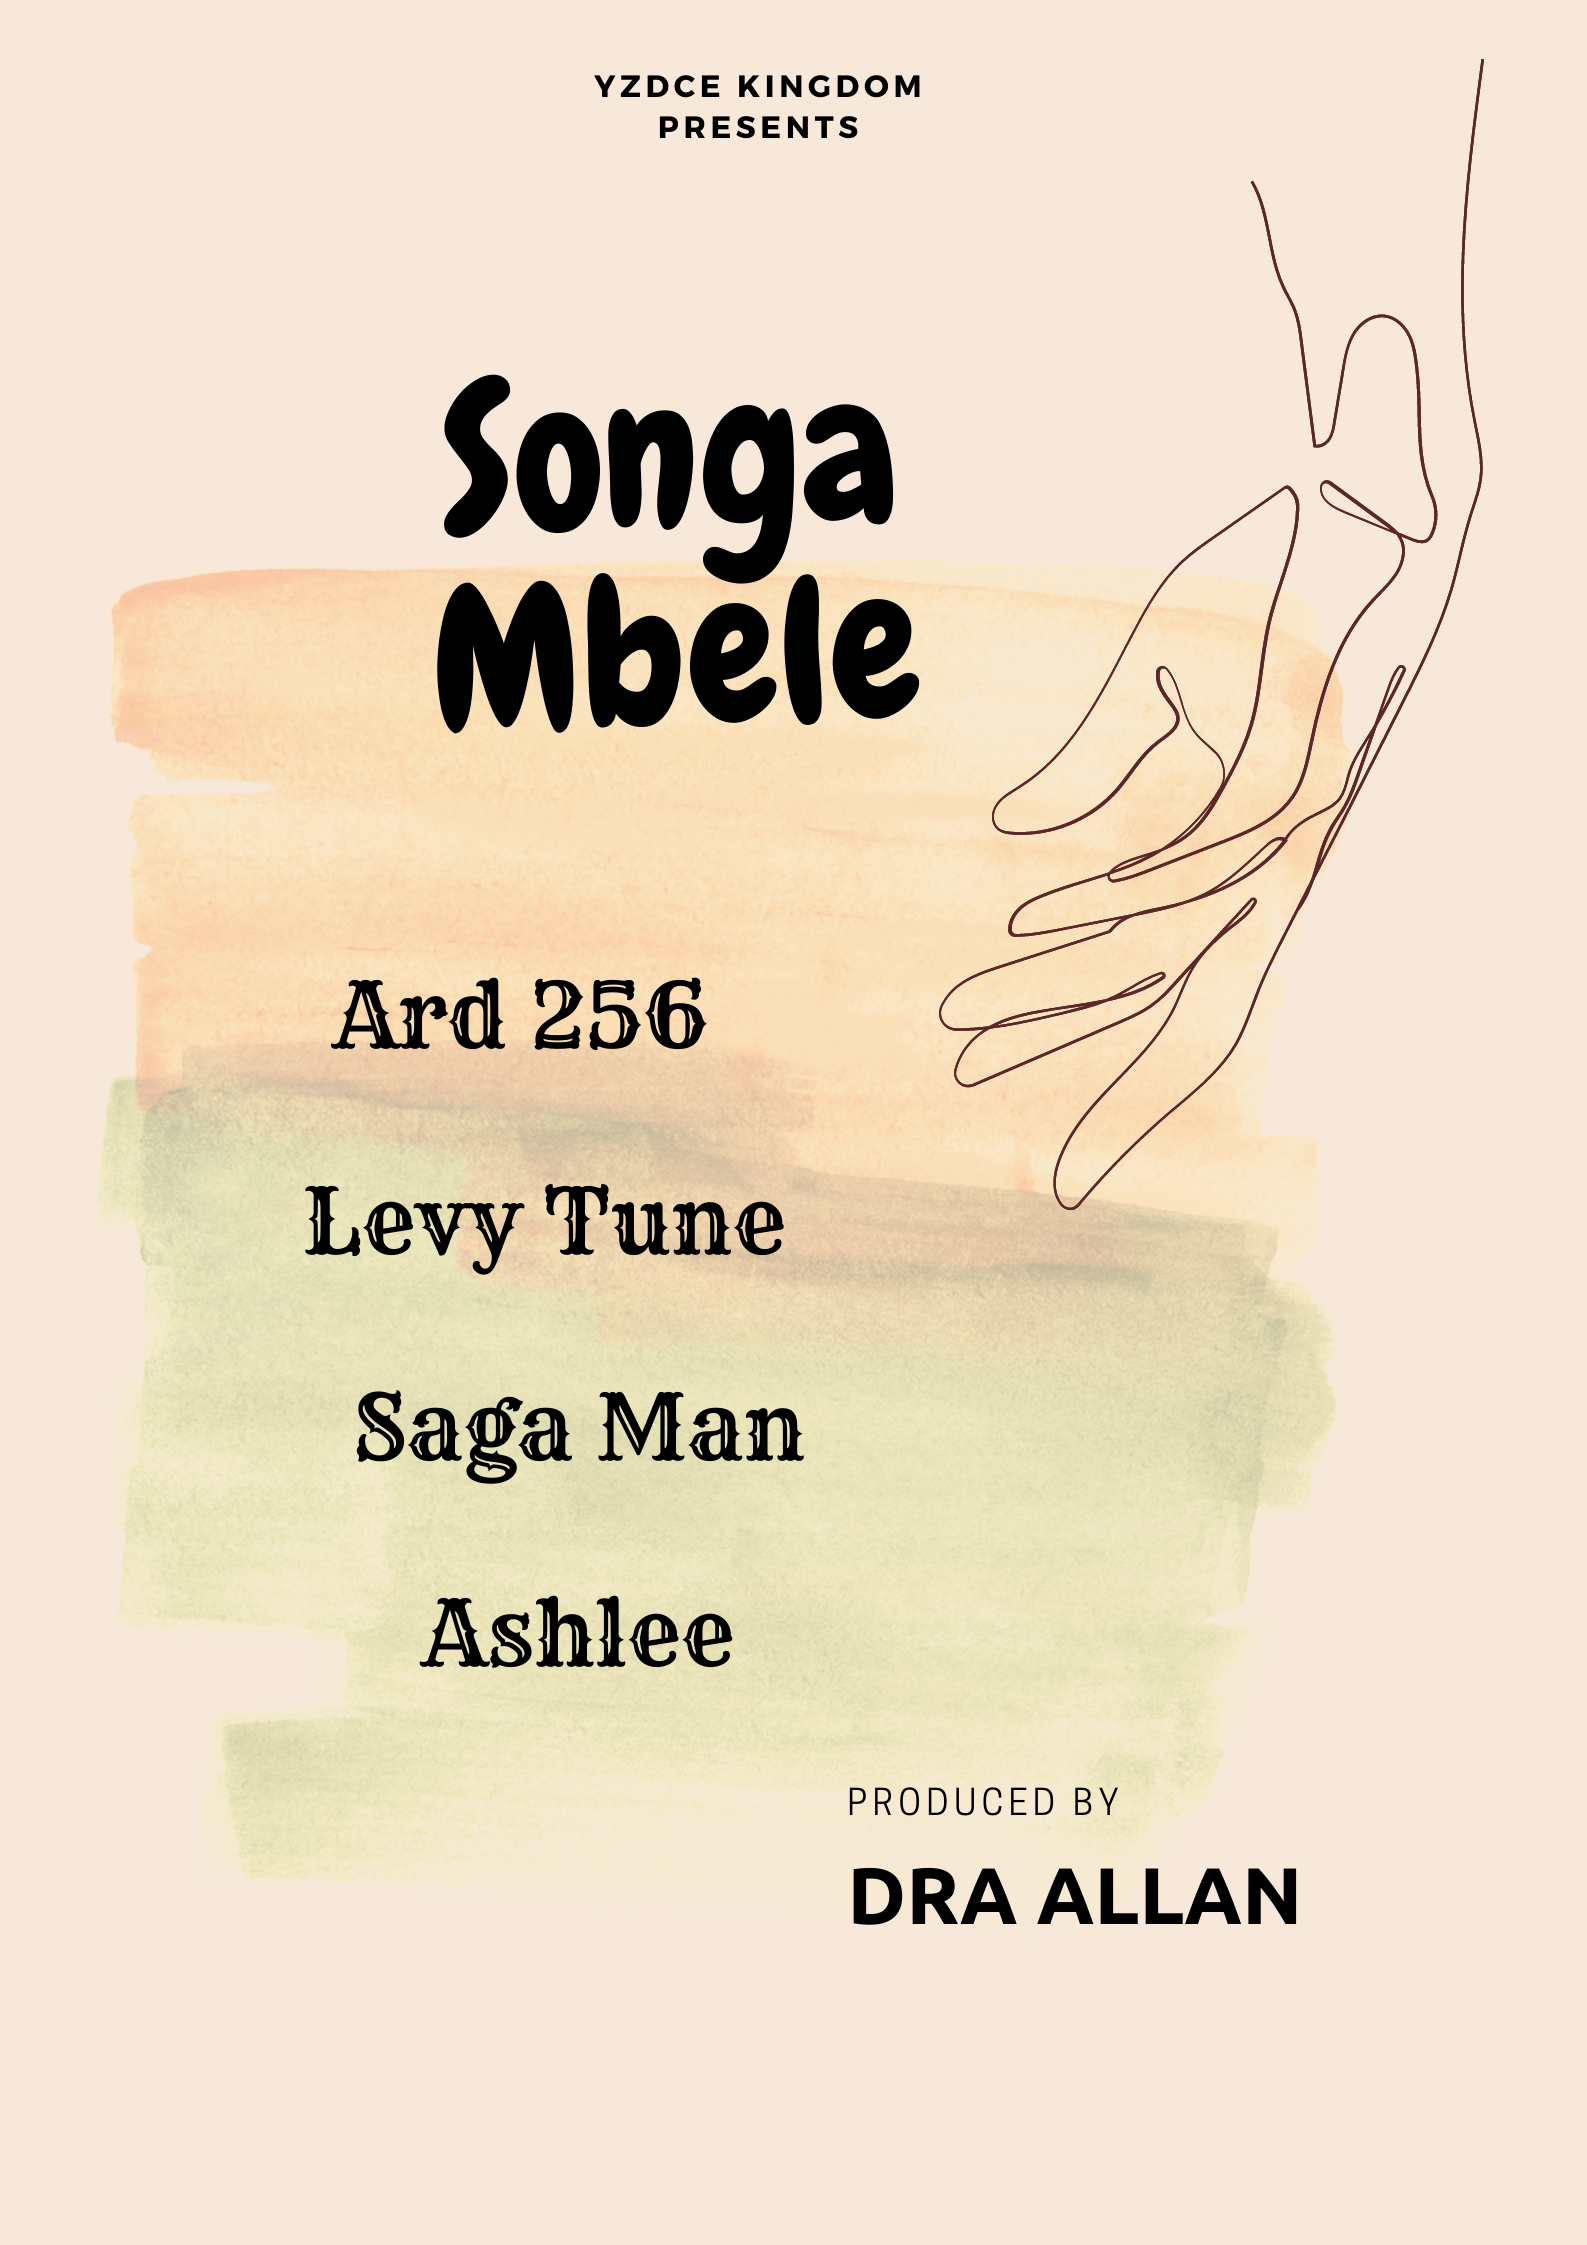 Songa Mbele (Ft Audio machine, Ard256, Ashlee, Saga Man